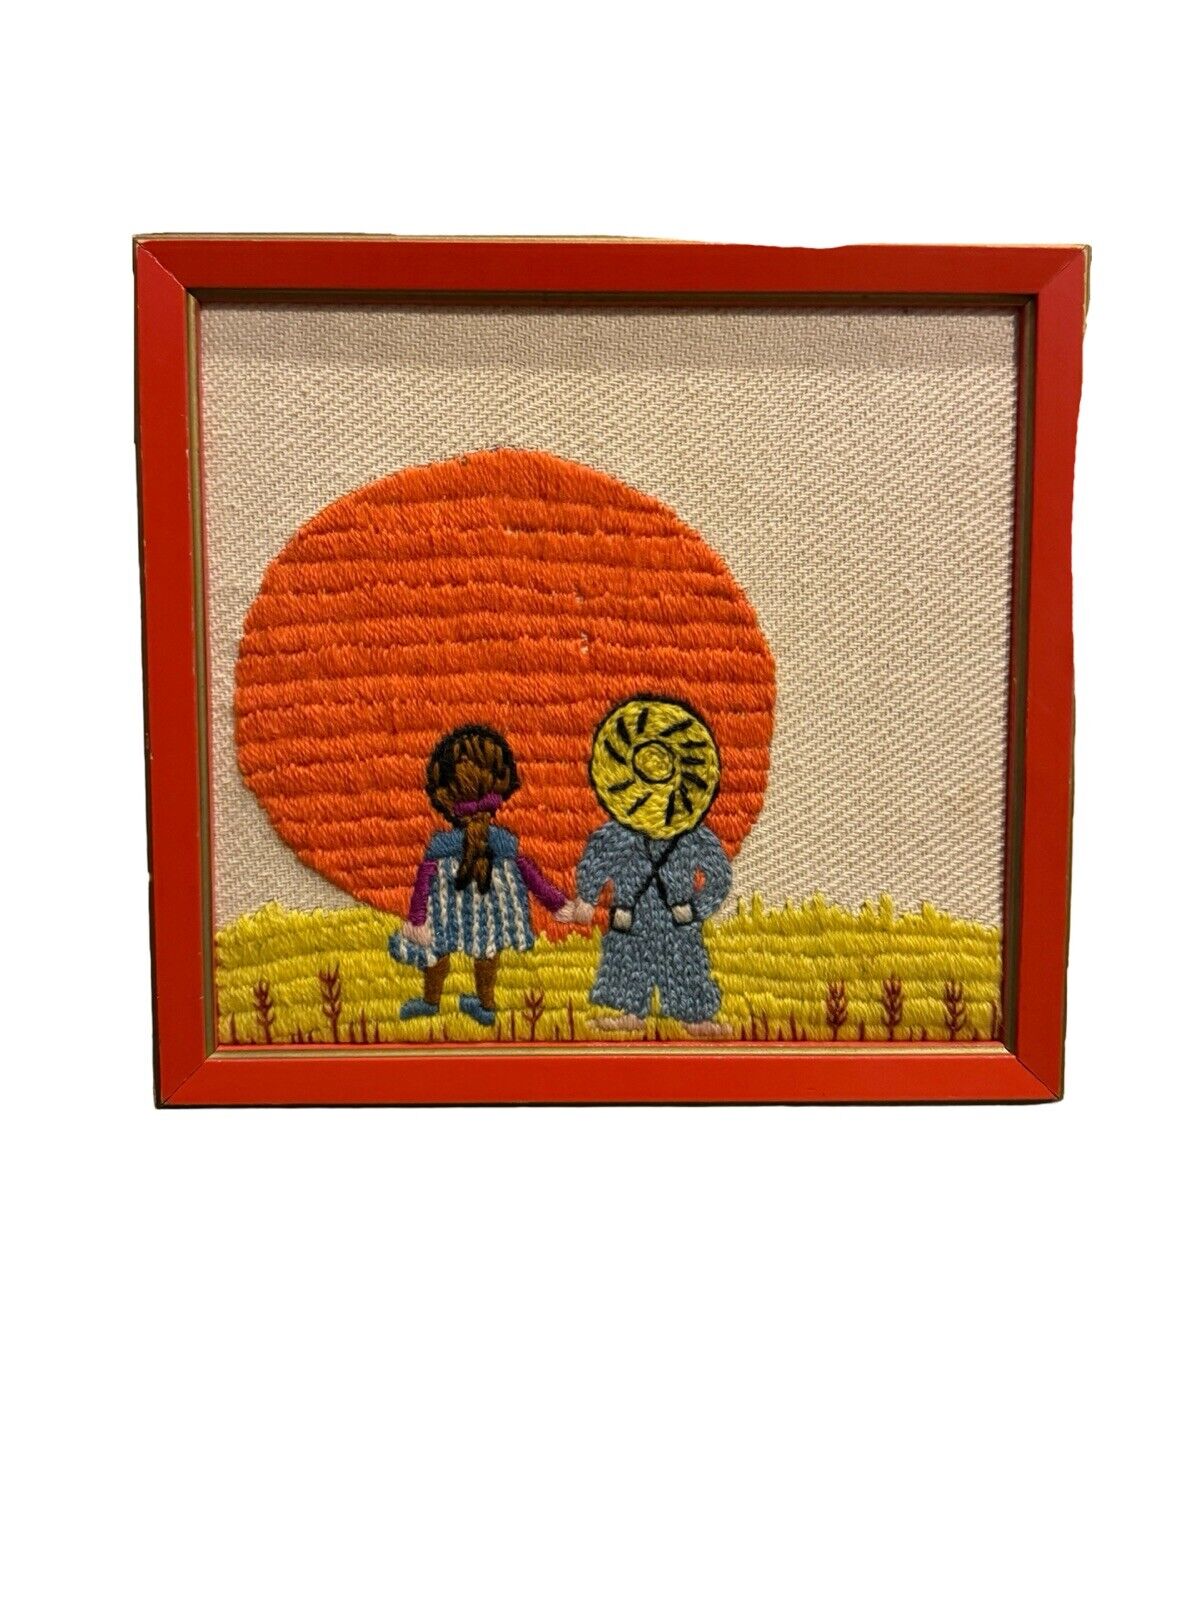 Vintage Embroidery Crewel Framed Artwork Boy Girl Farmers Sunrise 1970s